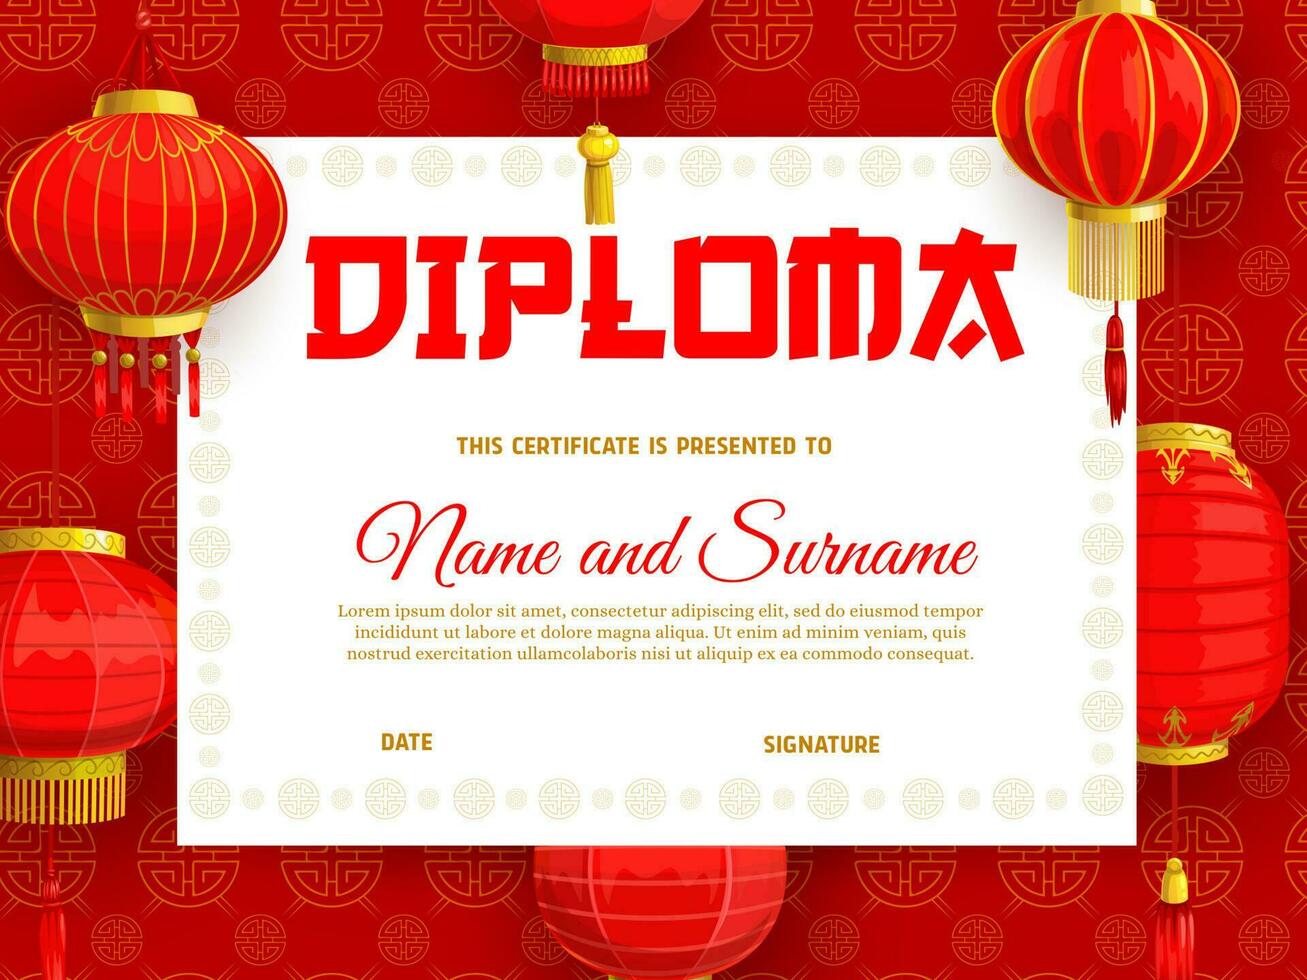 diploma modelo con chino nuevo año linternas vector